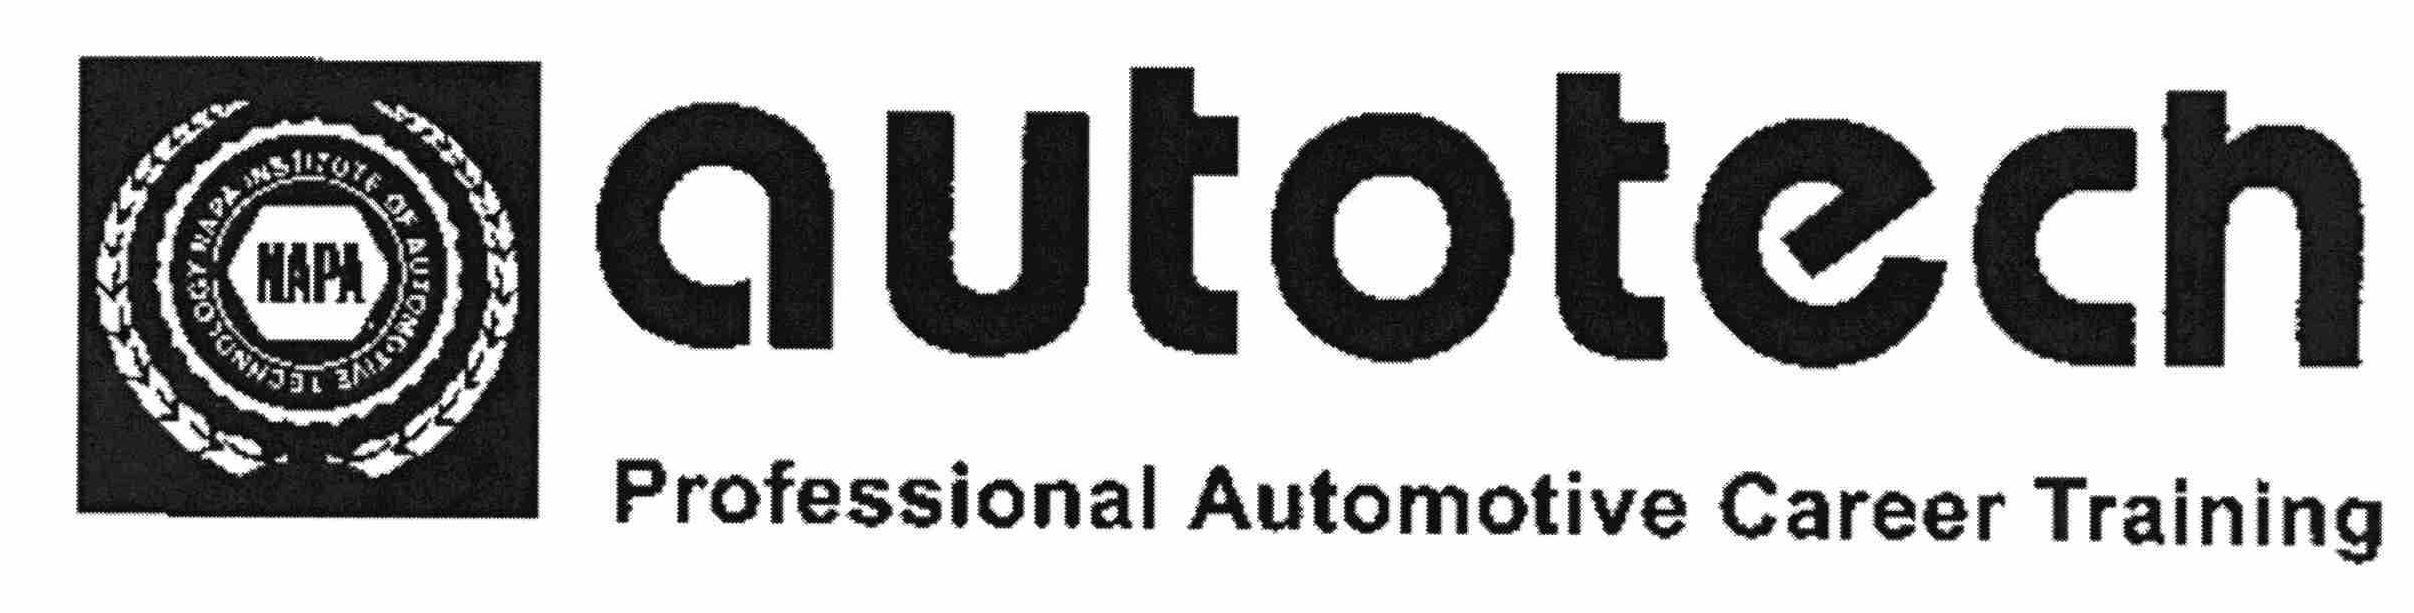 Trademark Logo NAPA NAPA INSTITUTE OF AUTOMOTIVE TECHNOLOGY AUTOTECH PROFESSIONAL AUTOMOTIVE CAREER TRAINING